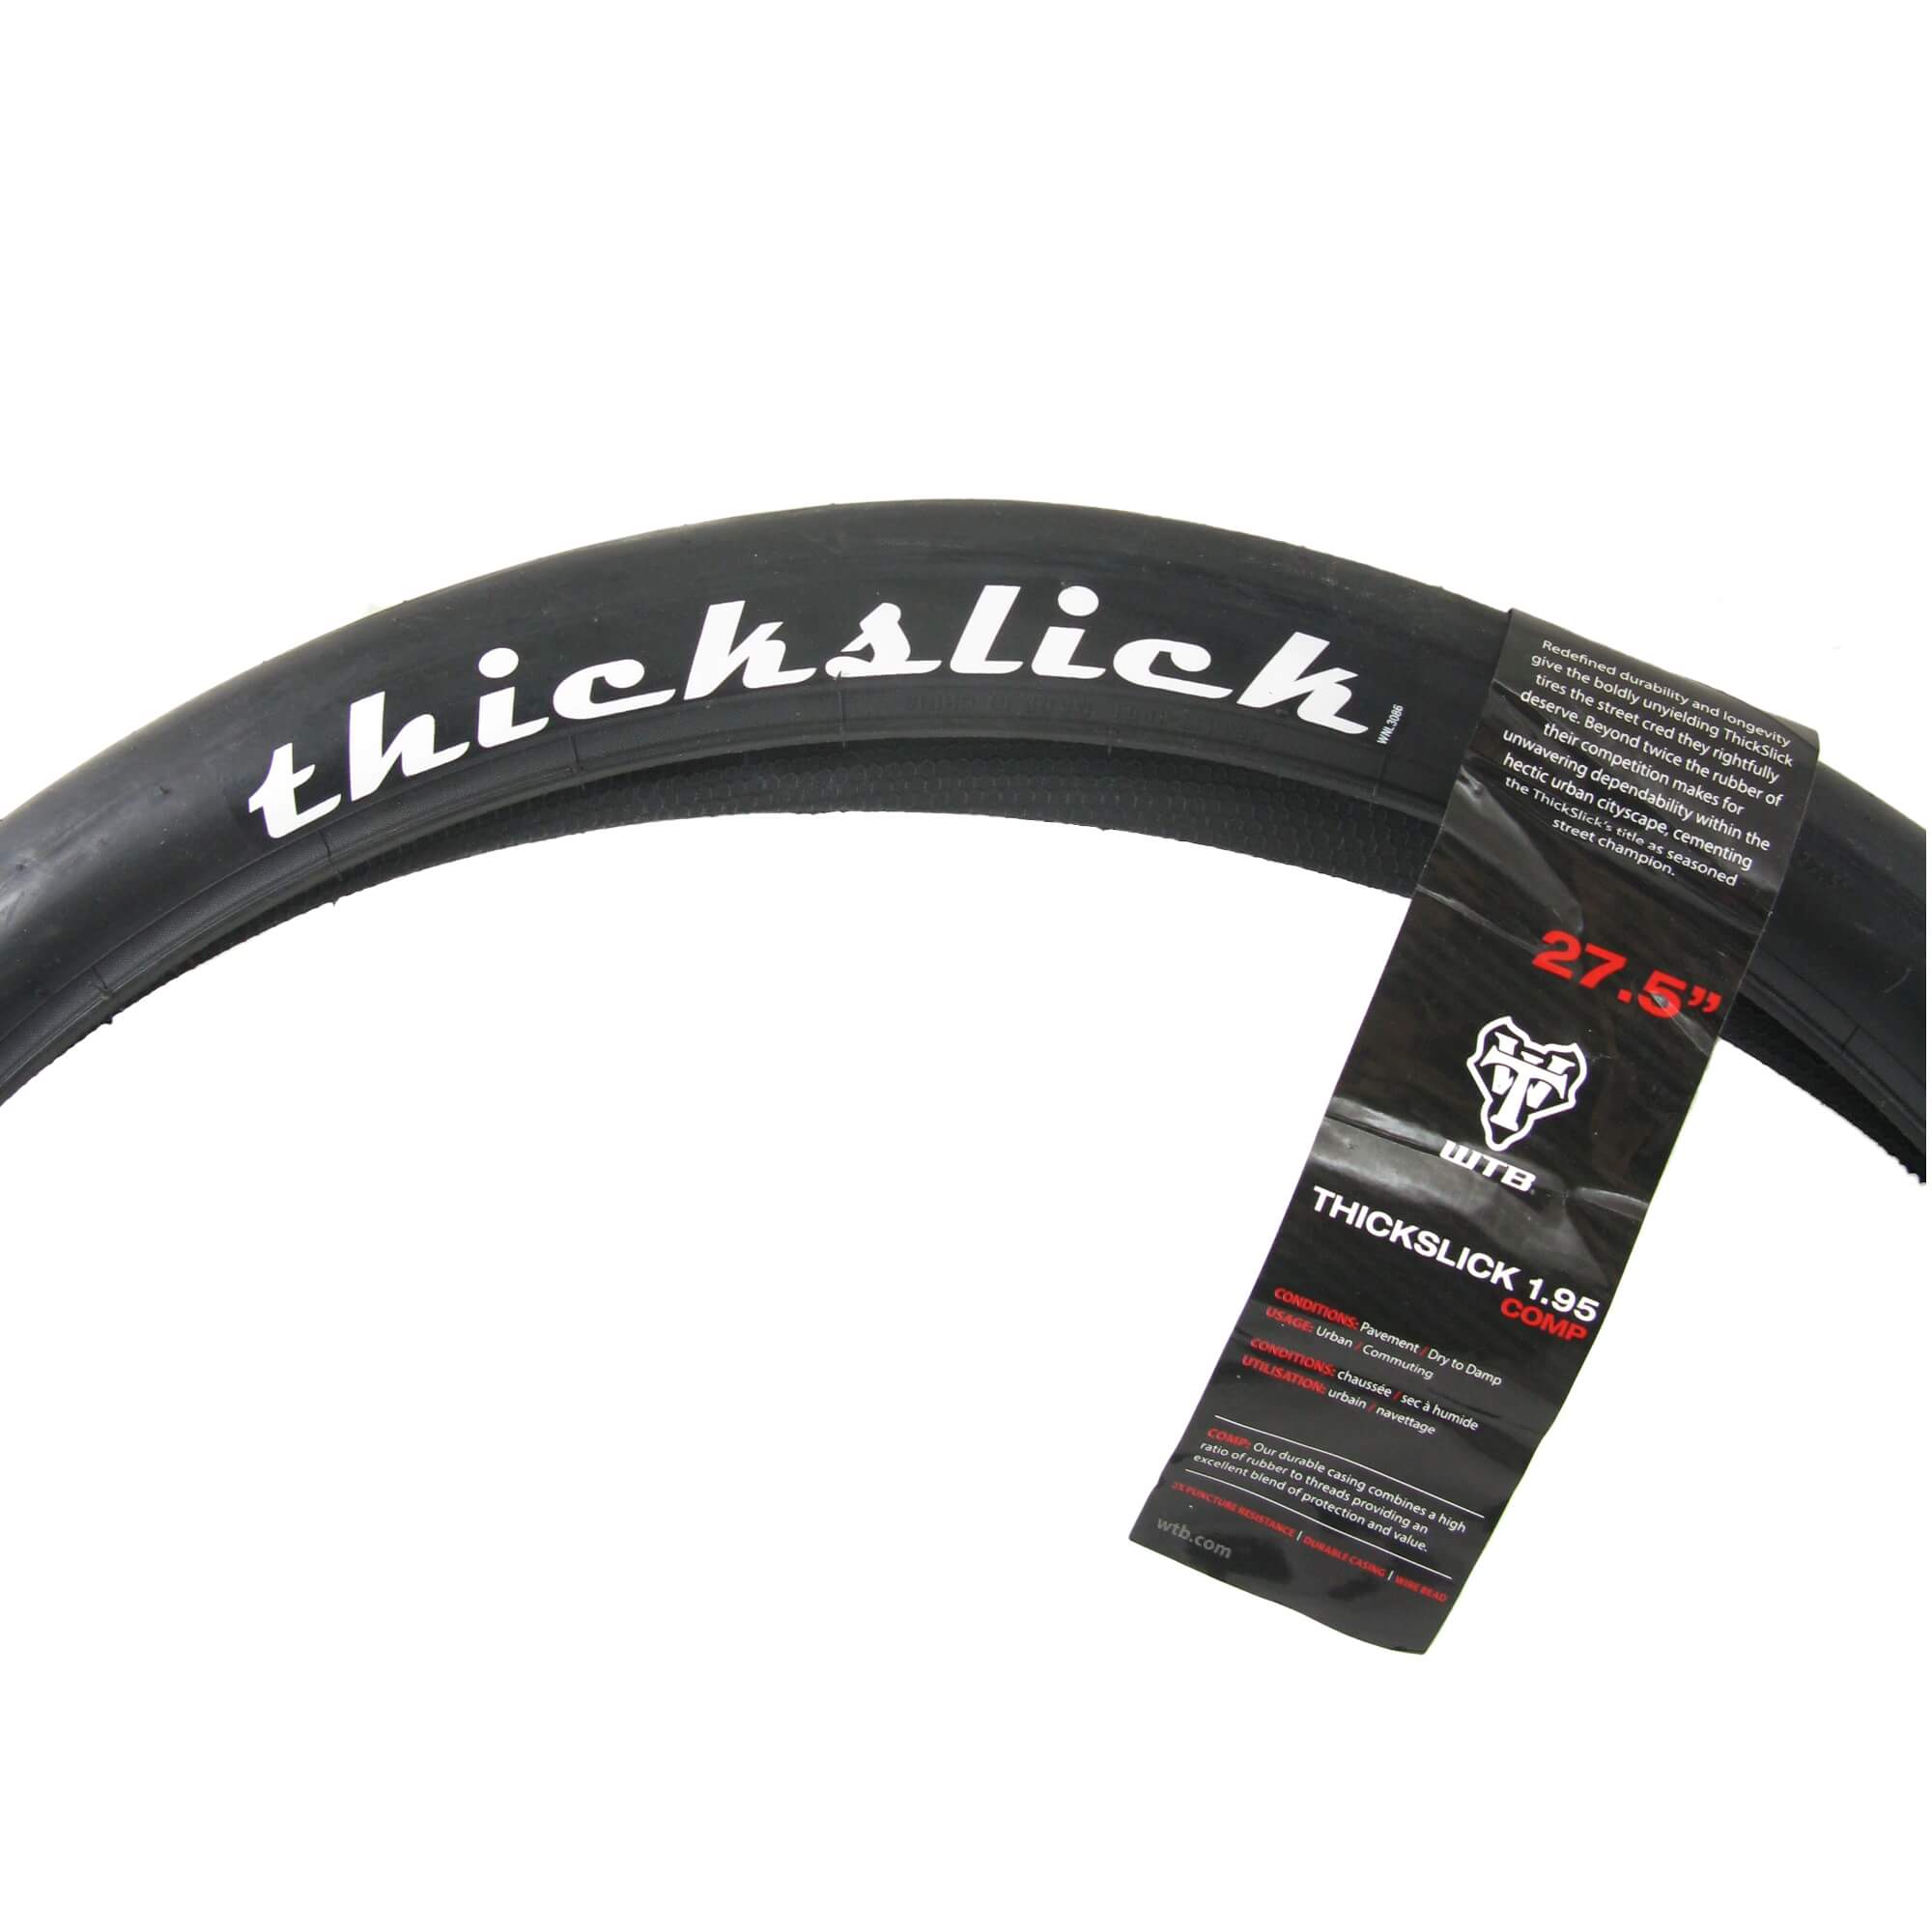 WTB Thickslick Comp 27.5x1.95 (650b) Tire